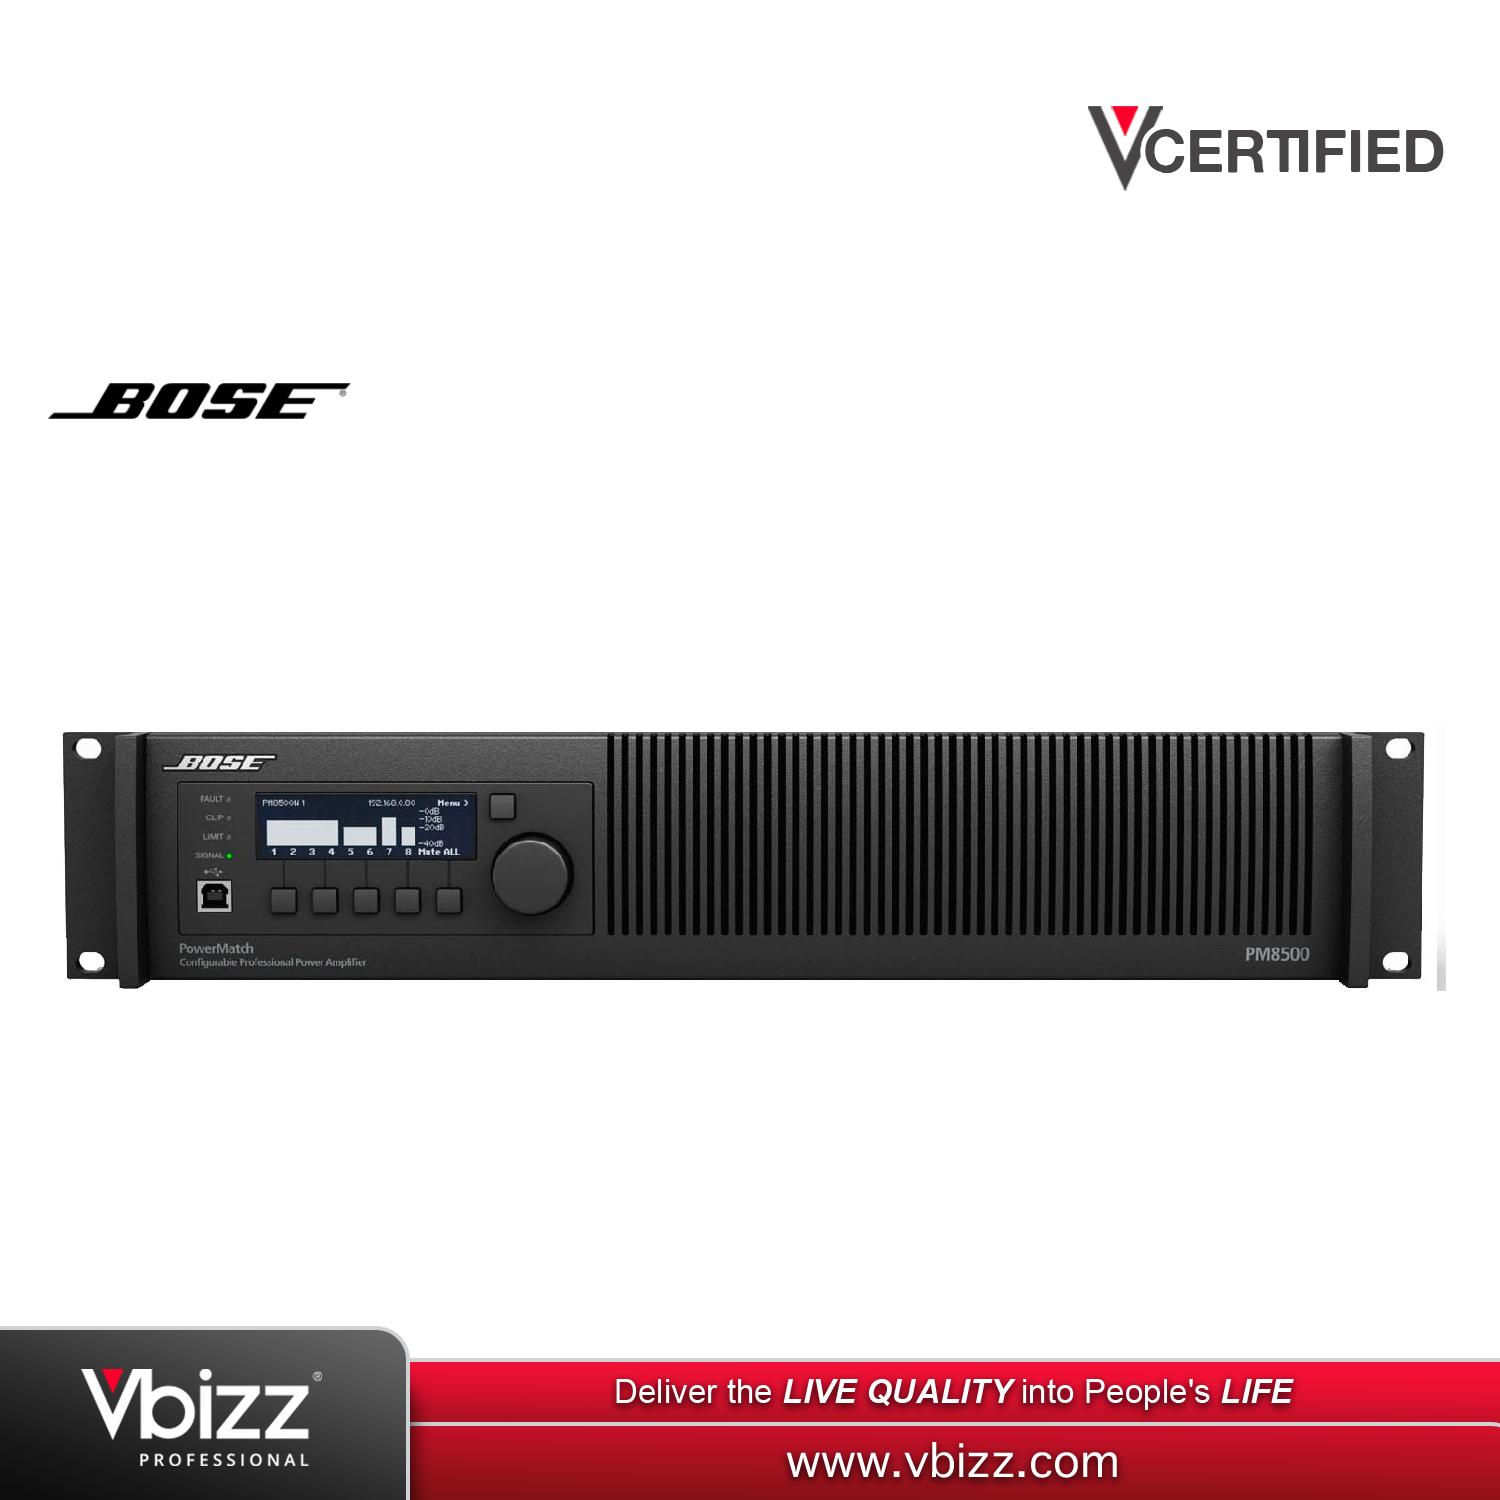 Blueprint Bliv overrasket tunnel BOSE POWERMATCH PM4250 4x250W Mixer Amplifier | Vbizz